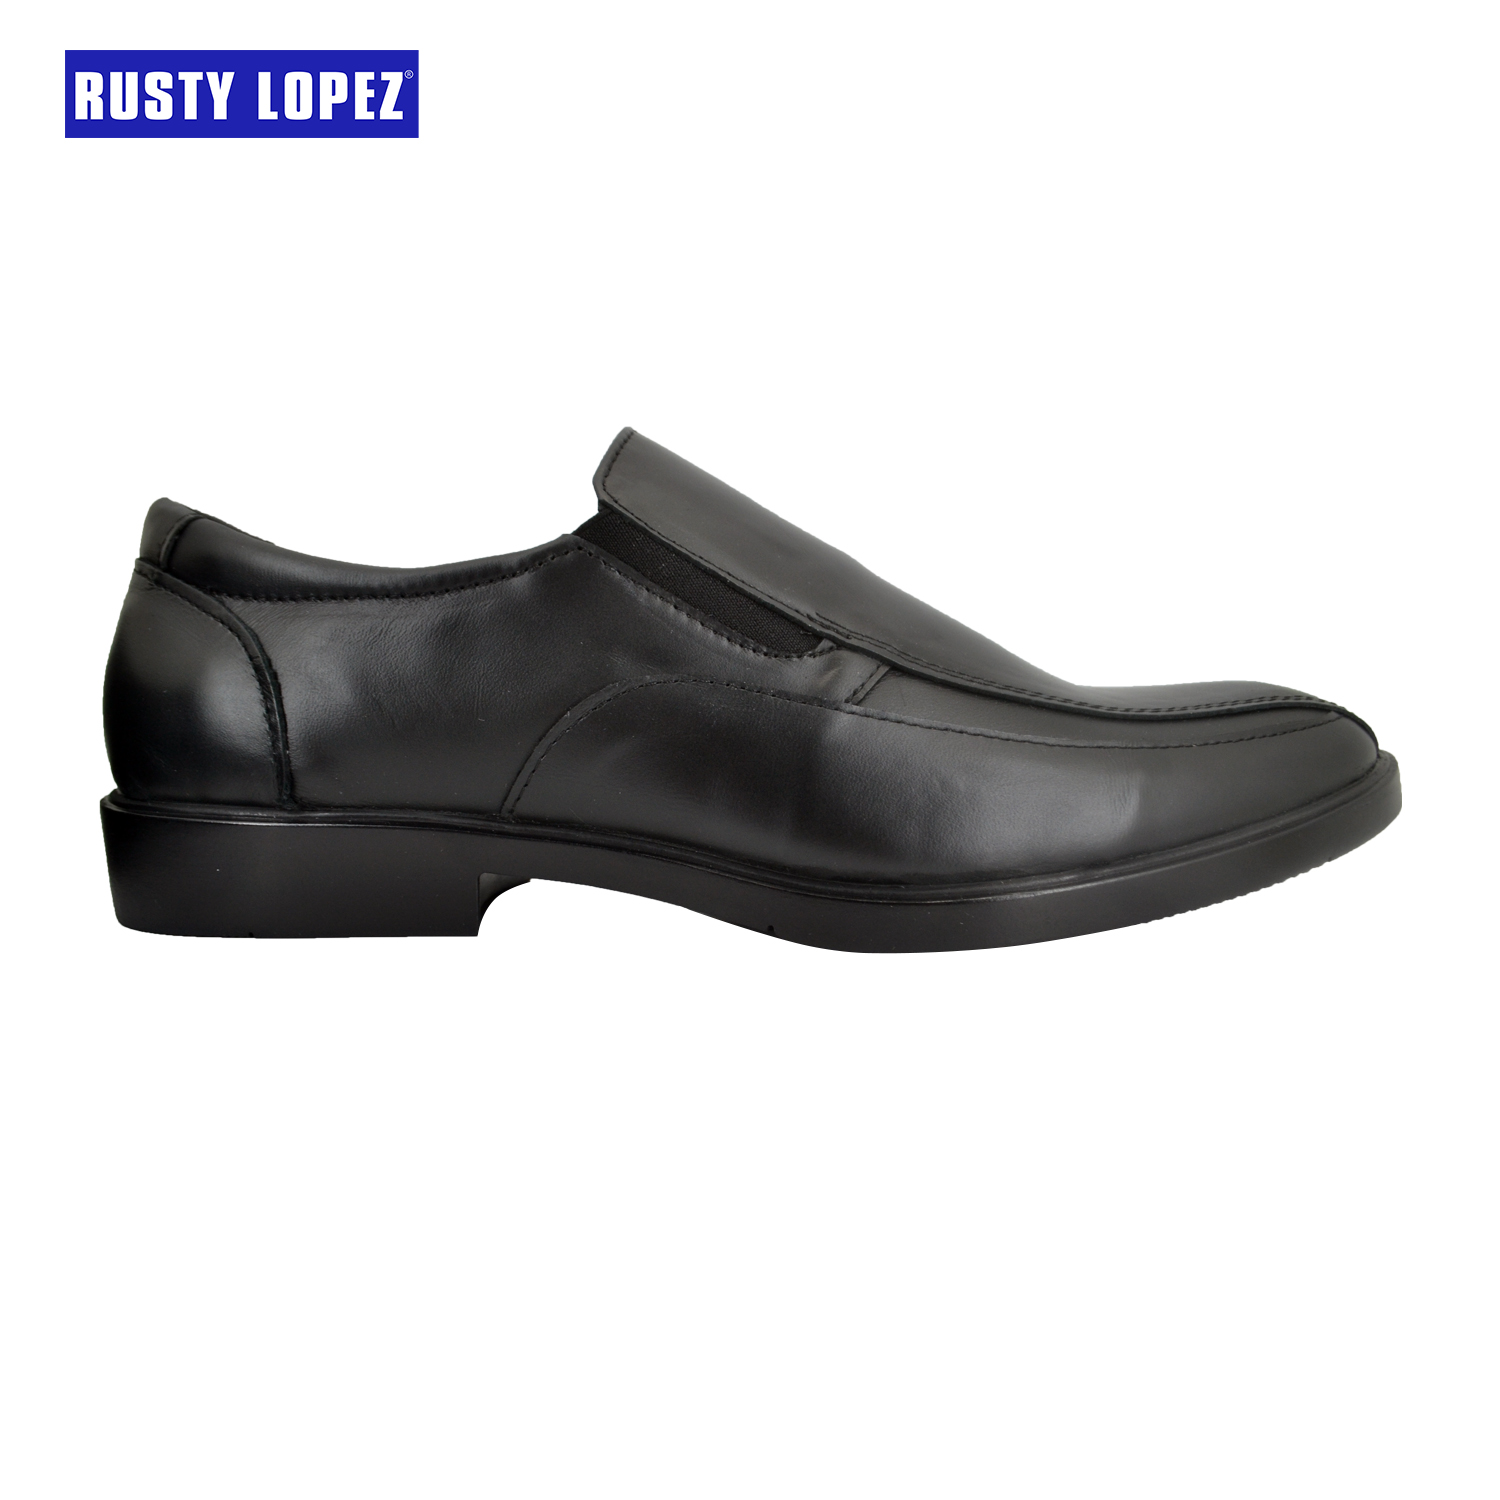 Rusty Lopez Men’s Formal Shoes – RMG23005F22